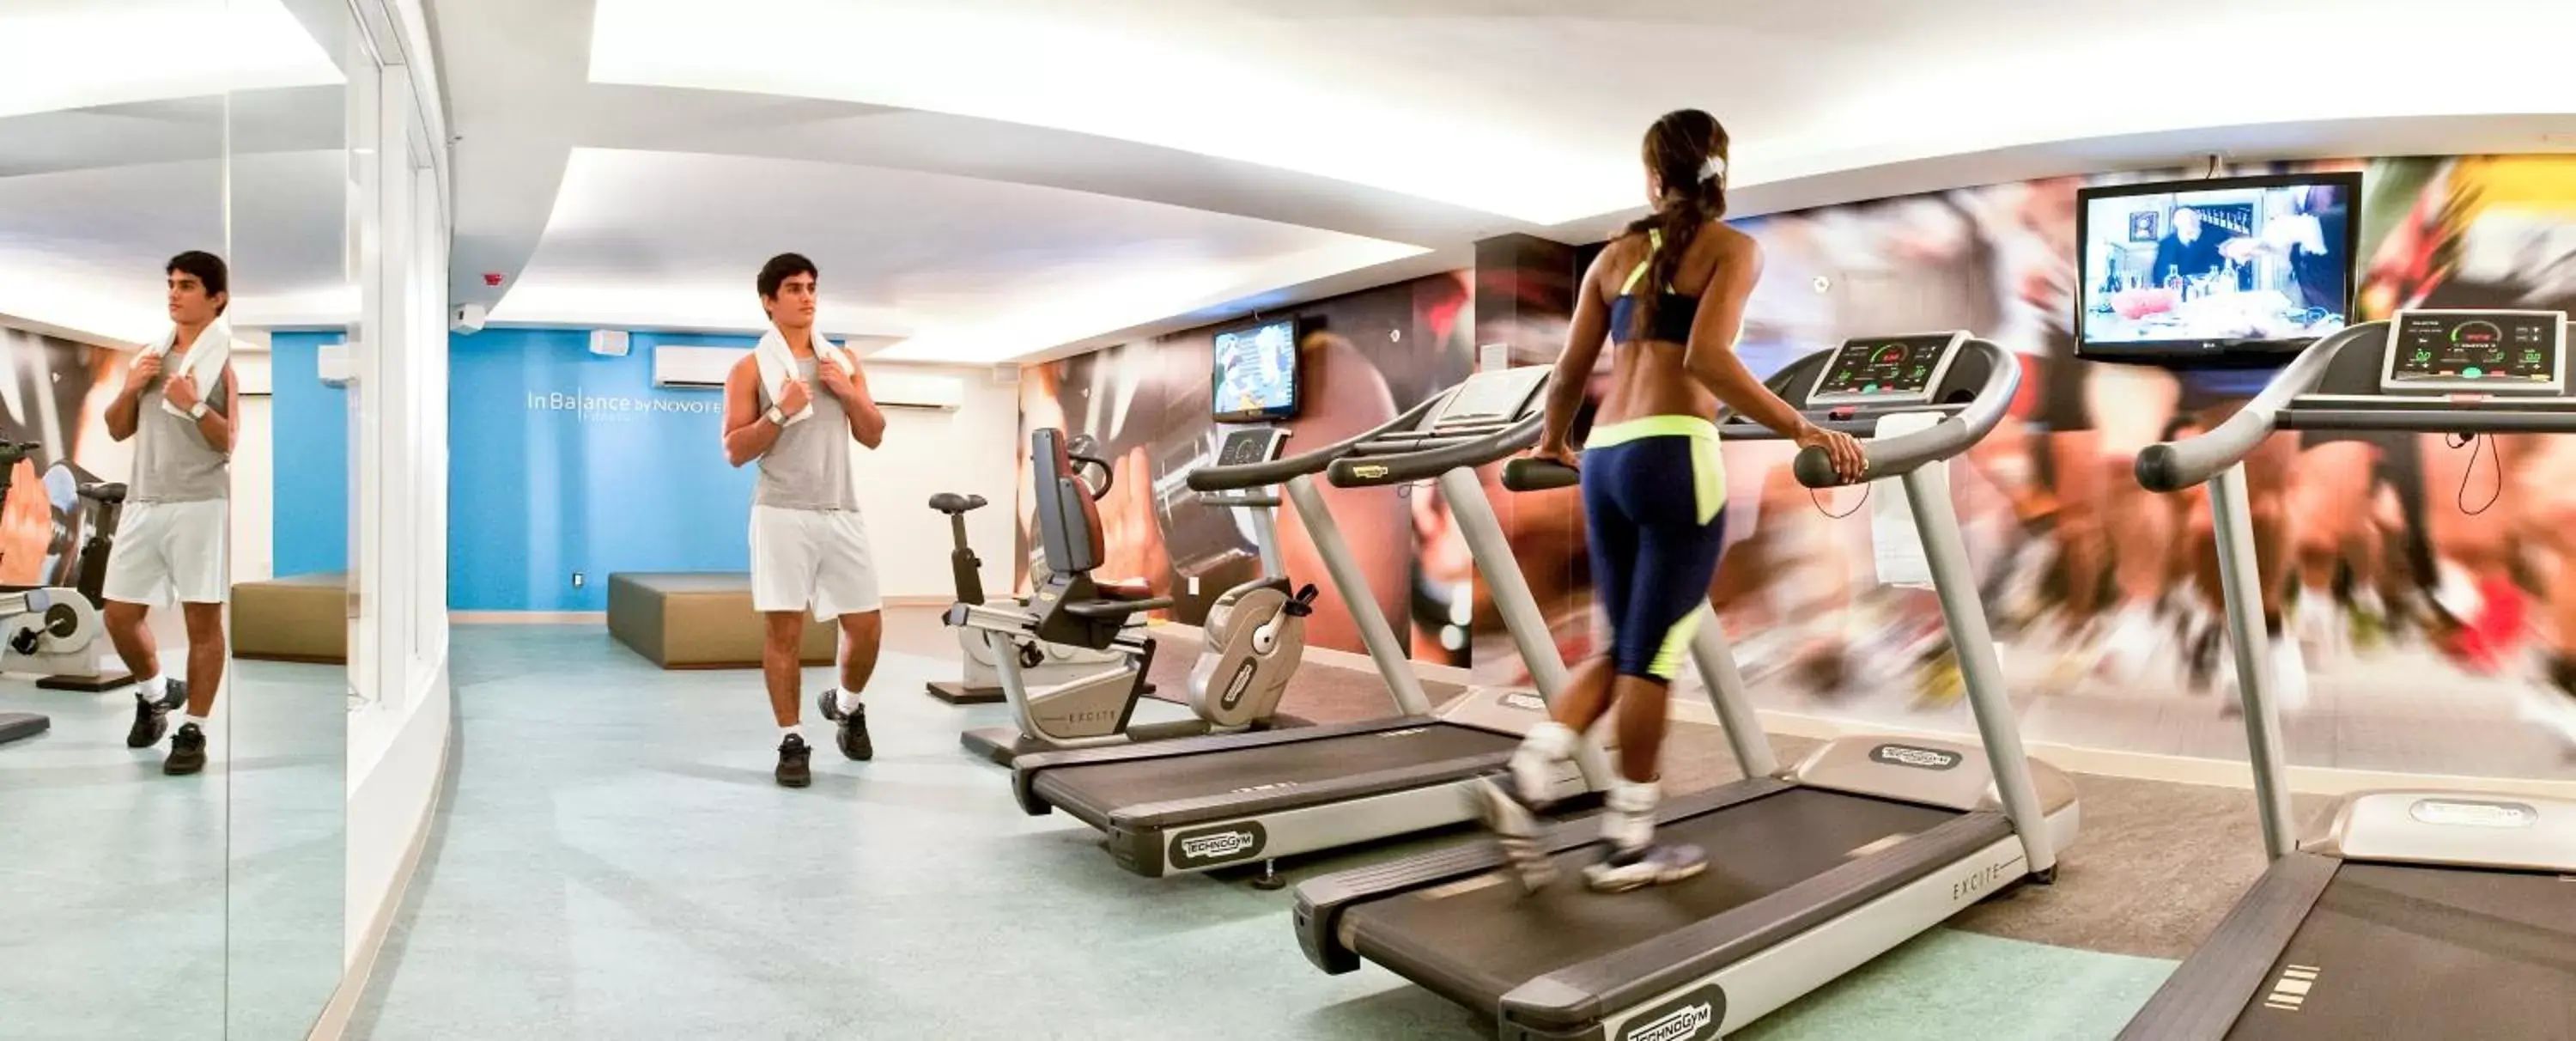 Fitness centre/facilities, Fitness Center/Facilities in Novotel RJ Santos Dumont